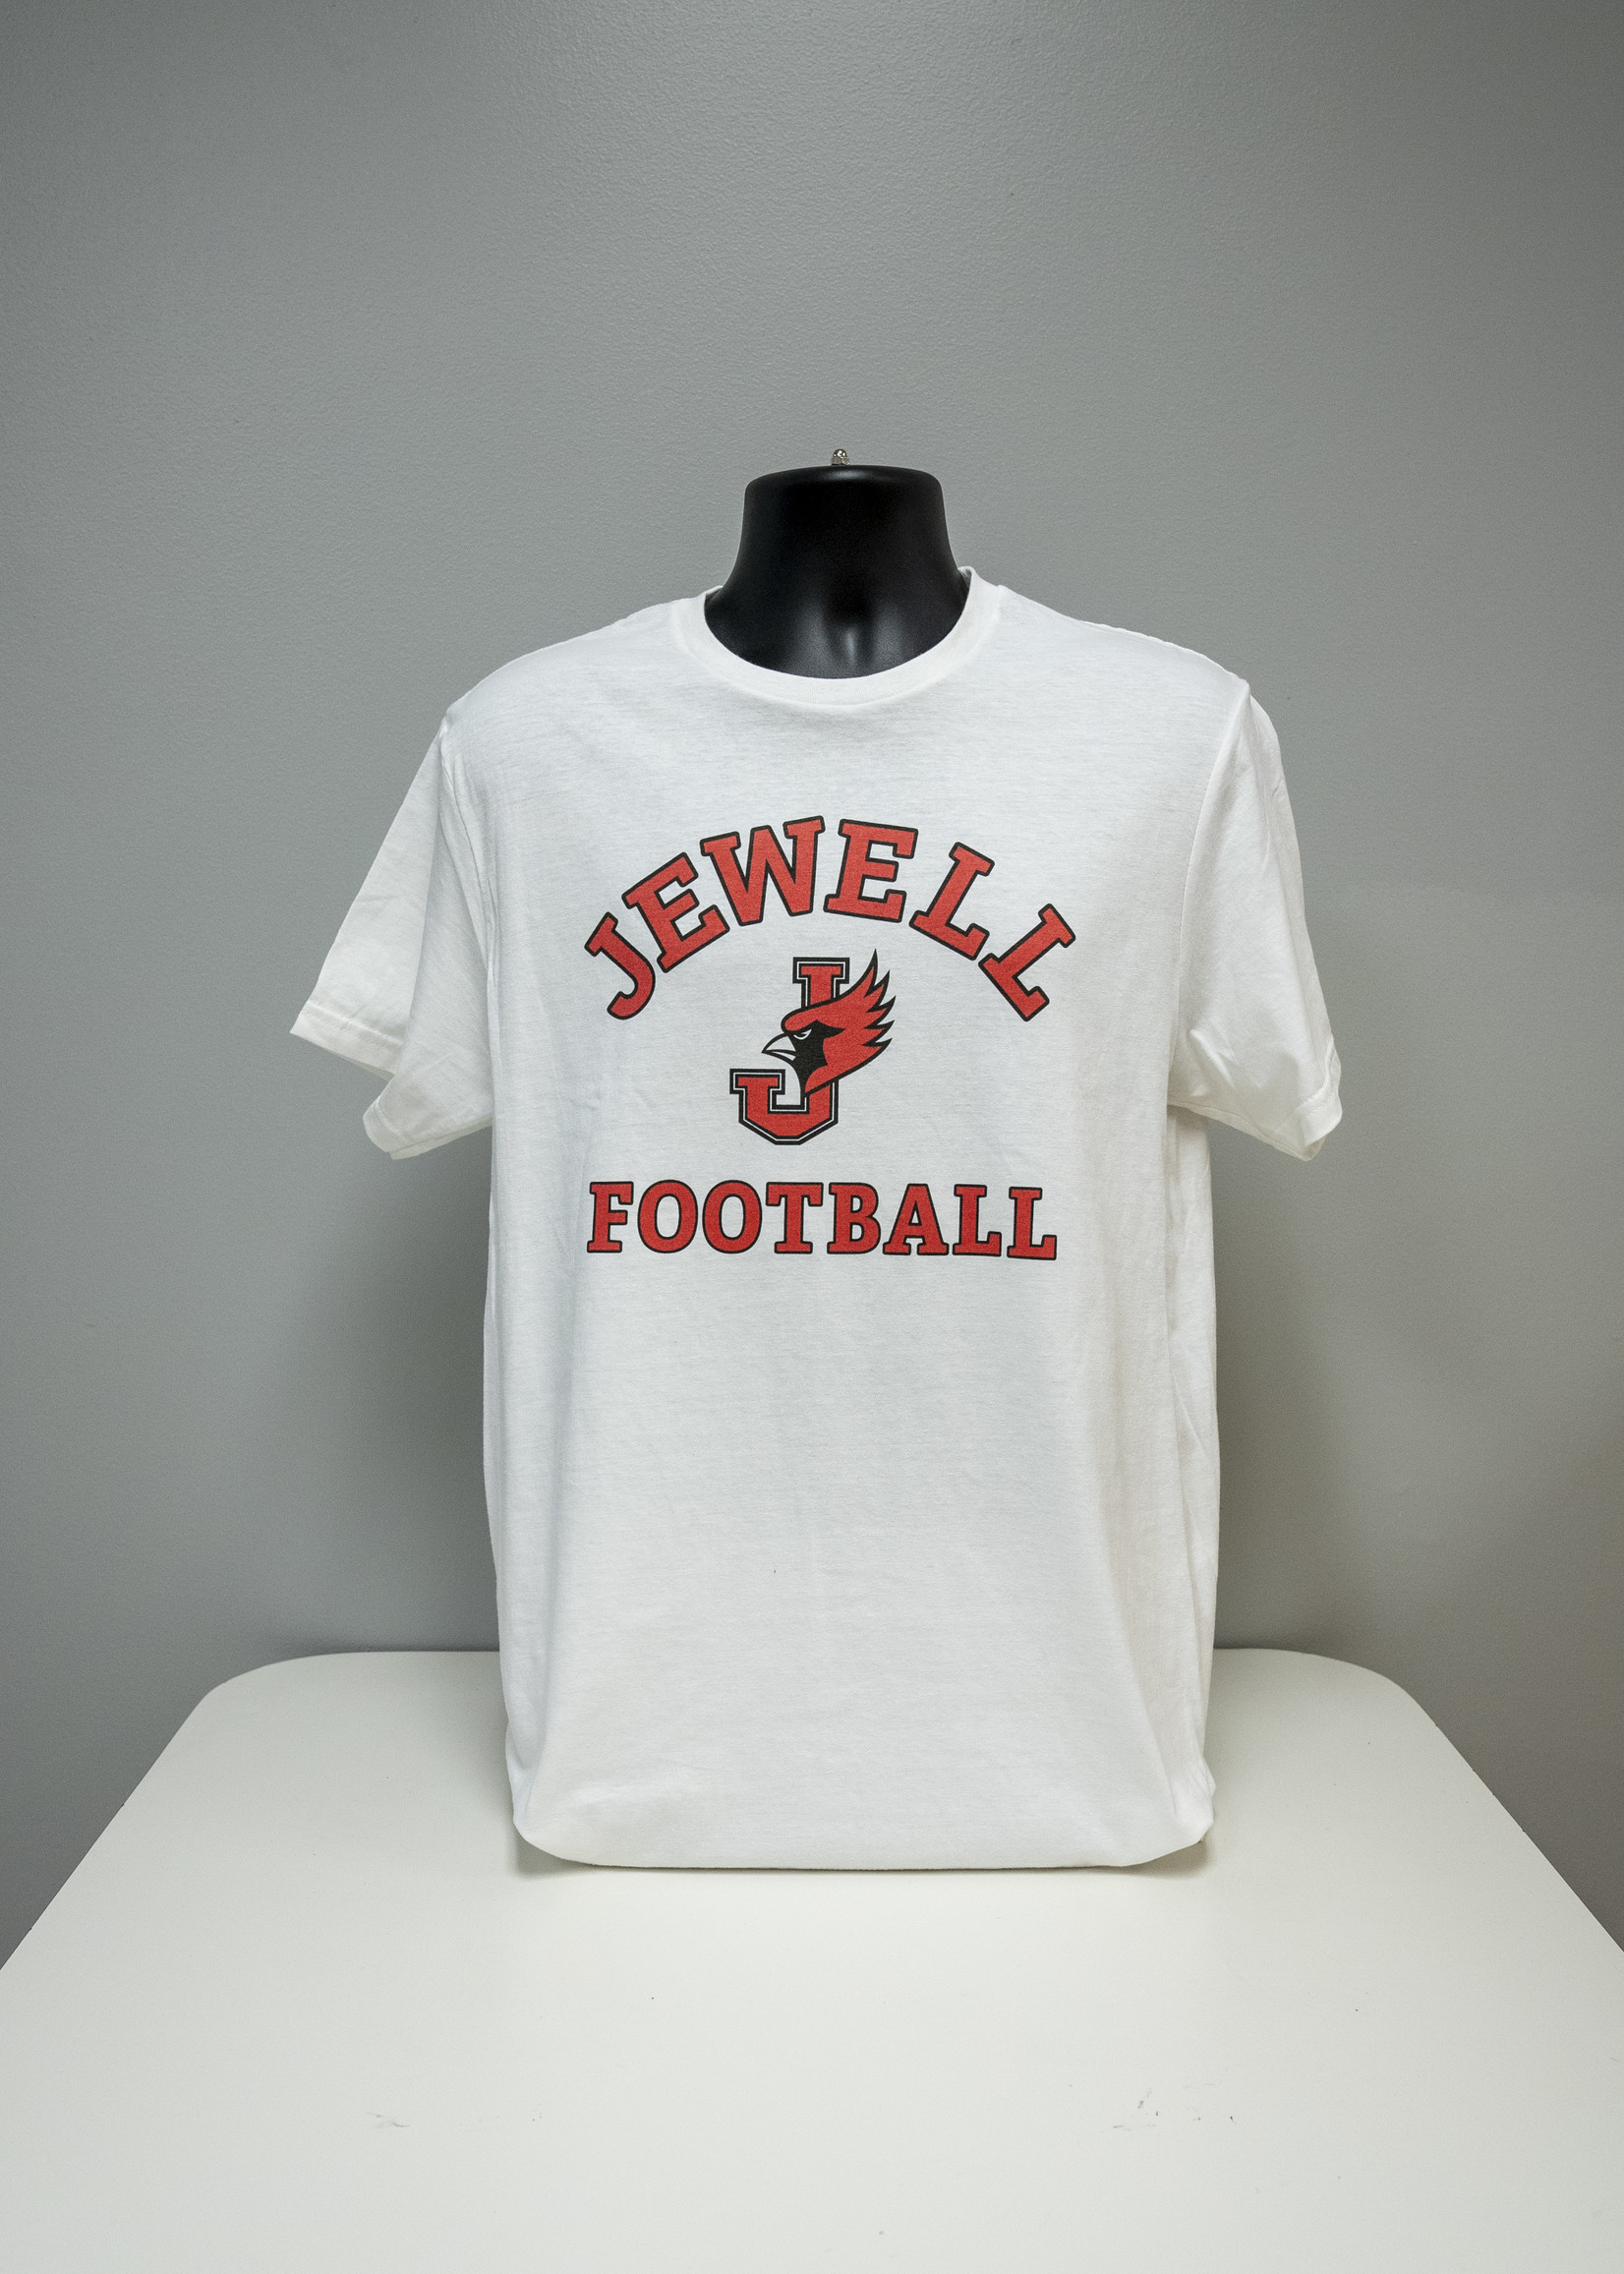 Football White T-shirt Jewell